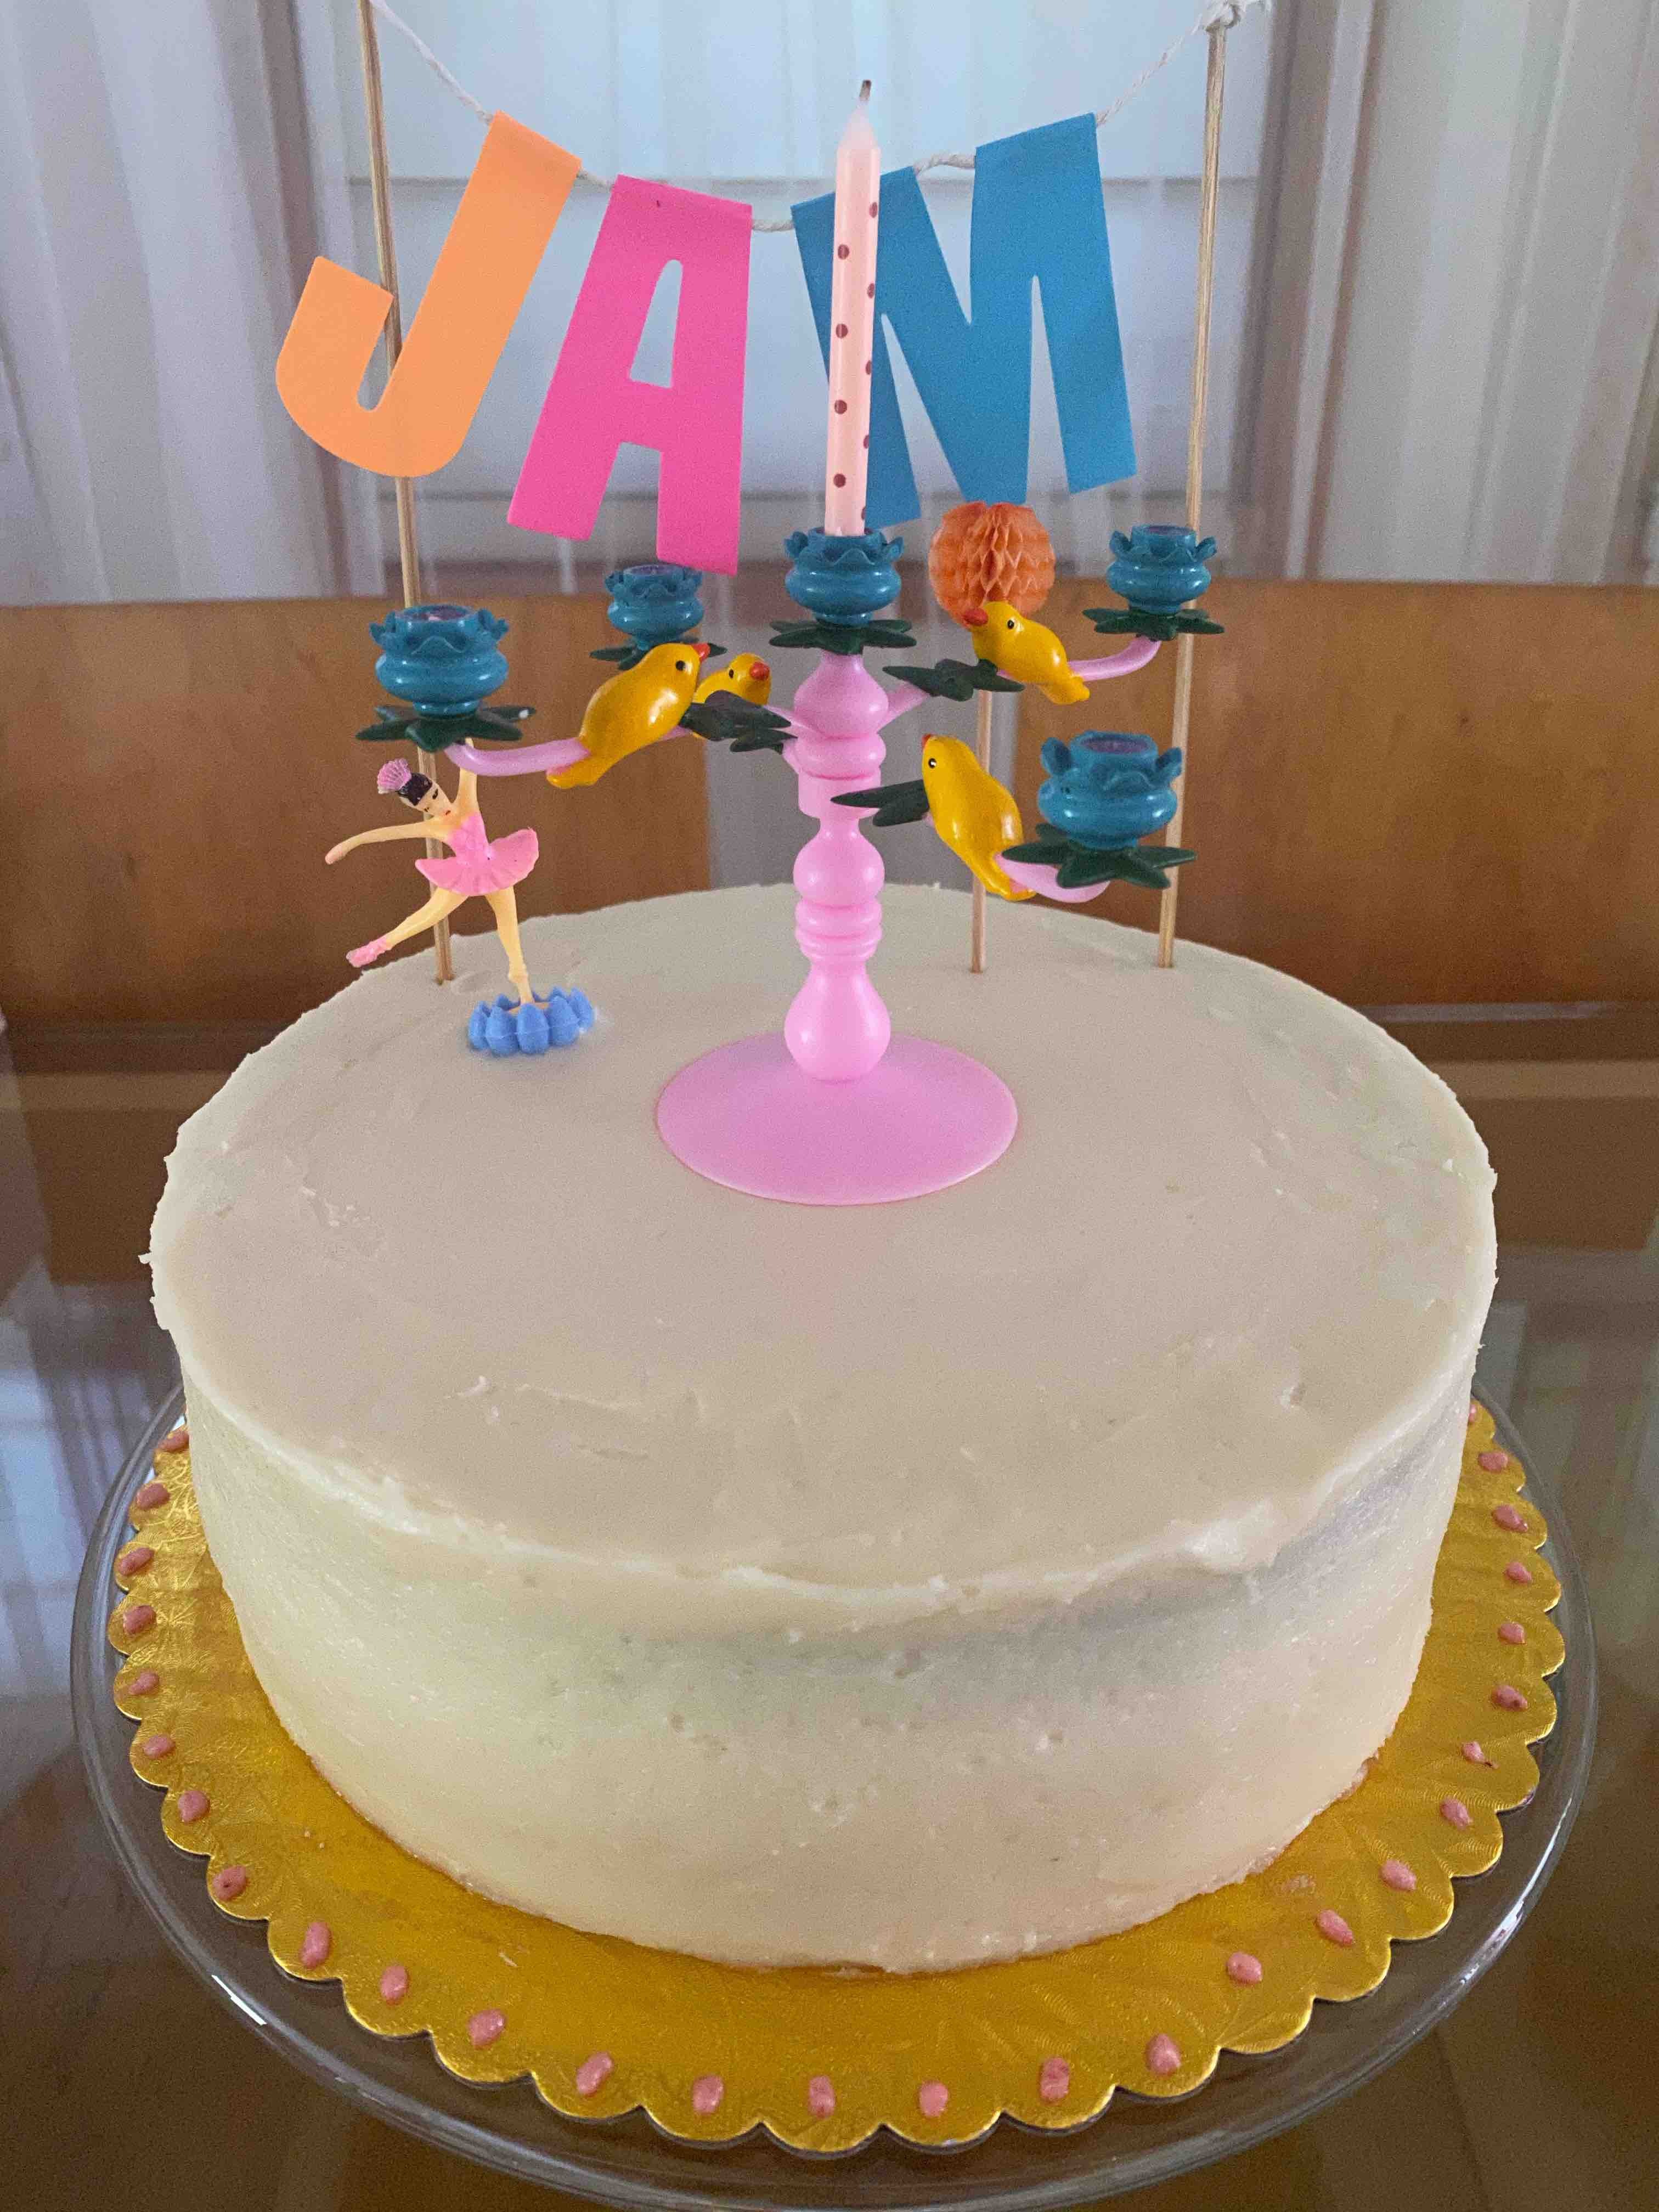 JAM cake